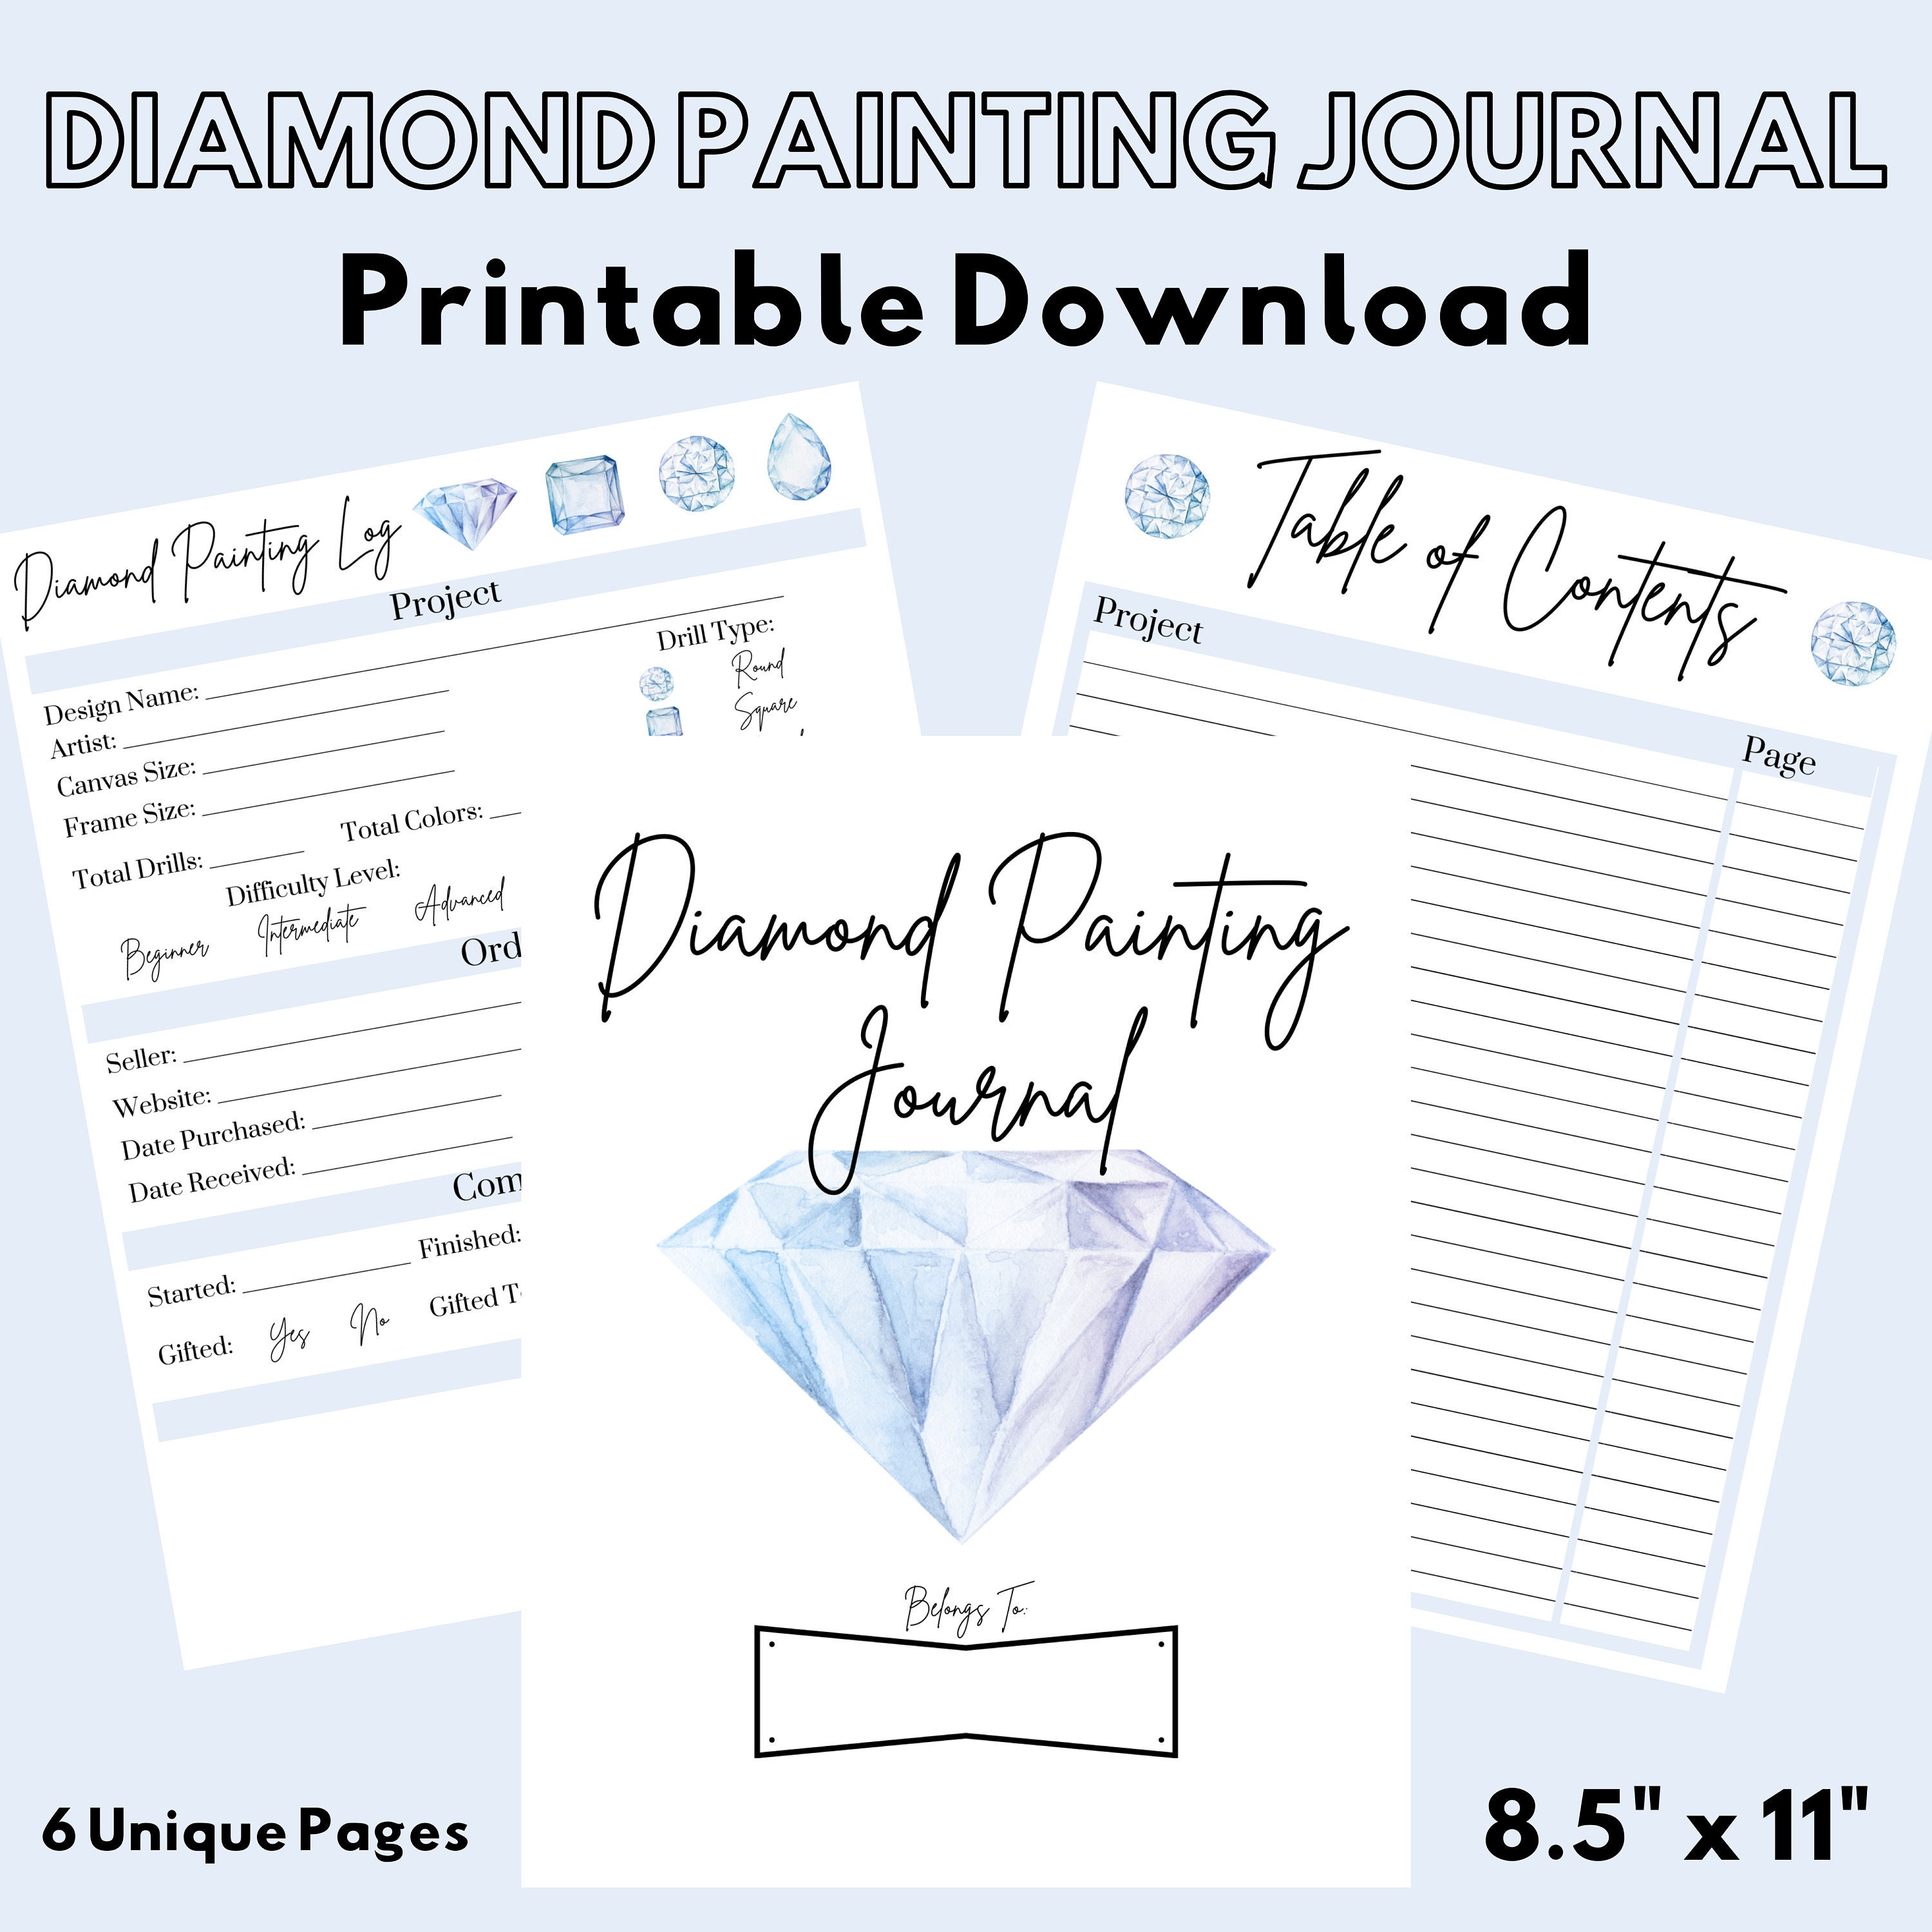 Diamond Art Journal 7 X 9.25 Vintage Floral Diamond Painting Journal  Planner Scrapbook Pages Digital Printable Download Log DAC Accessory 